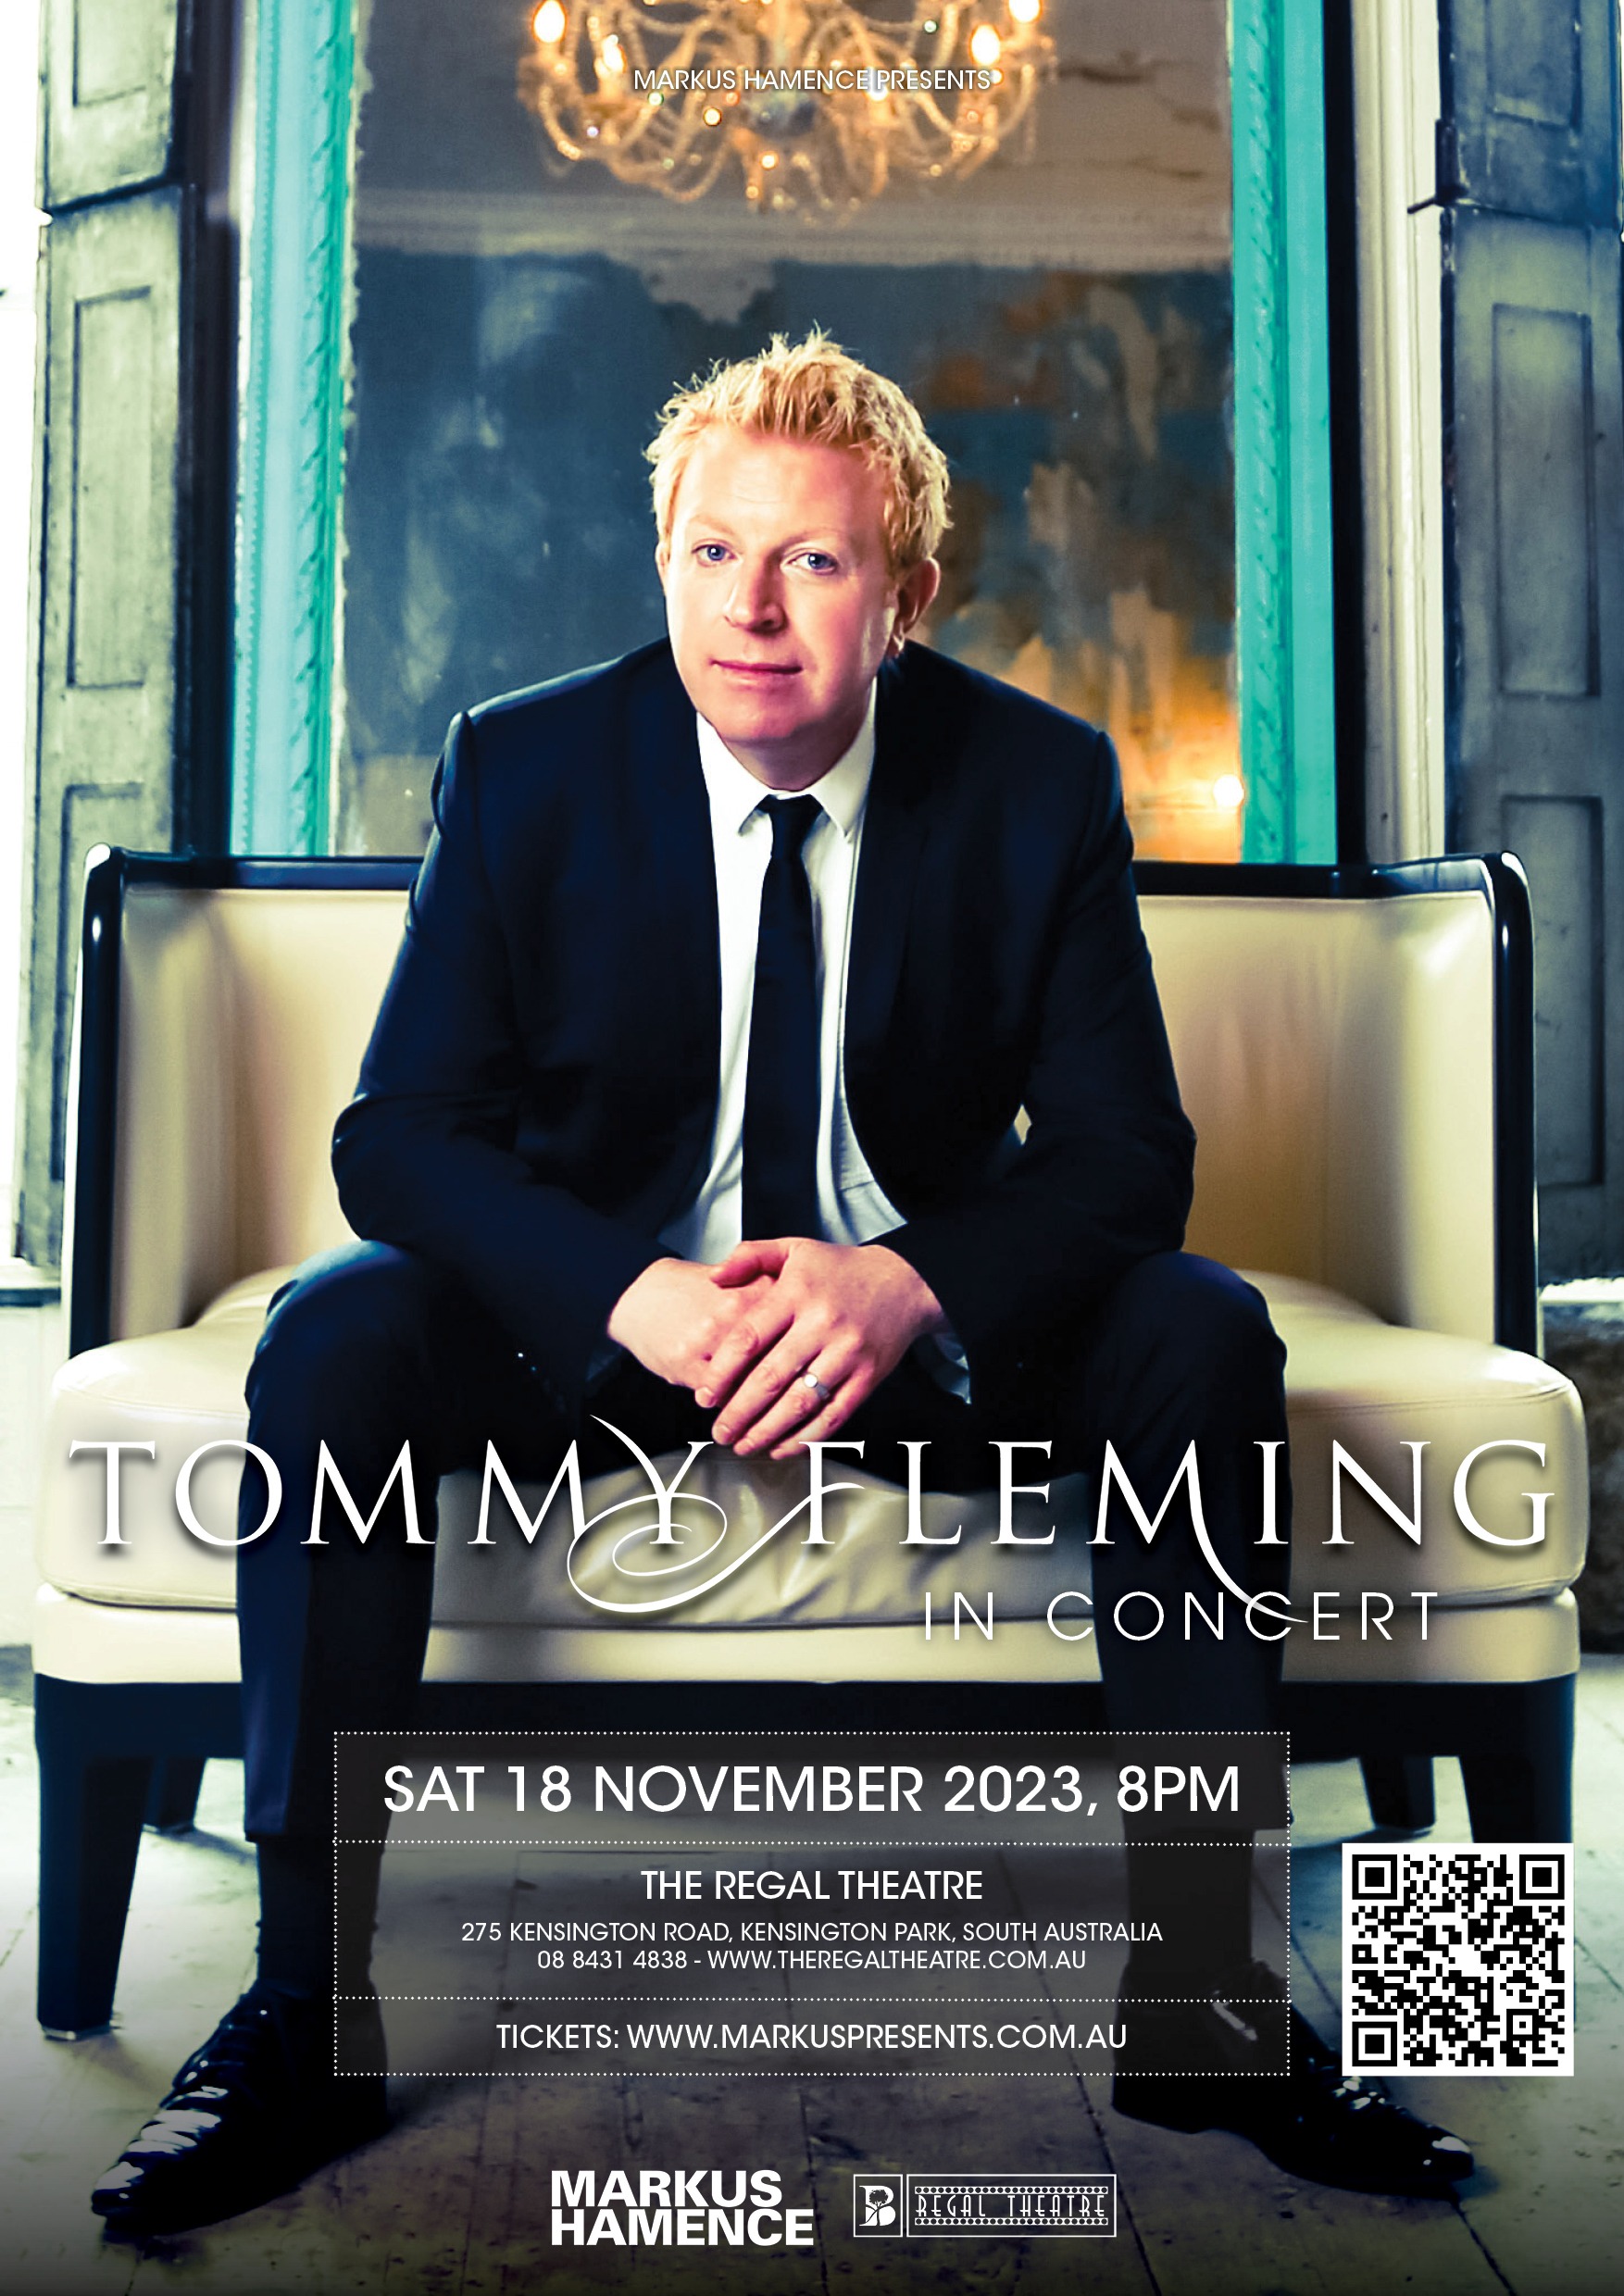 tommy fleming tour dates 2023